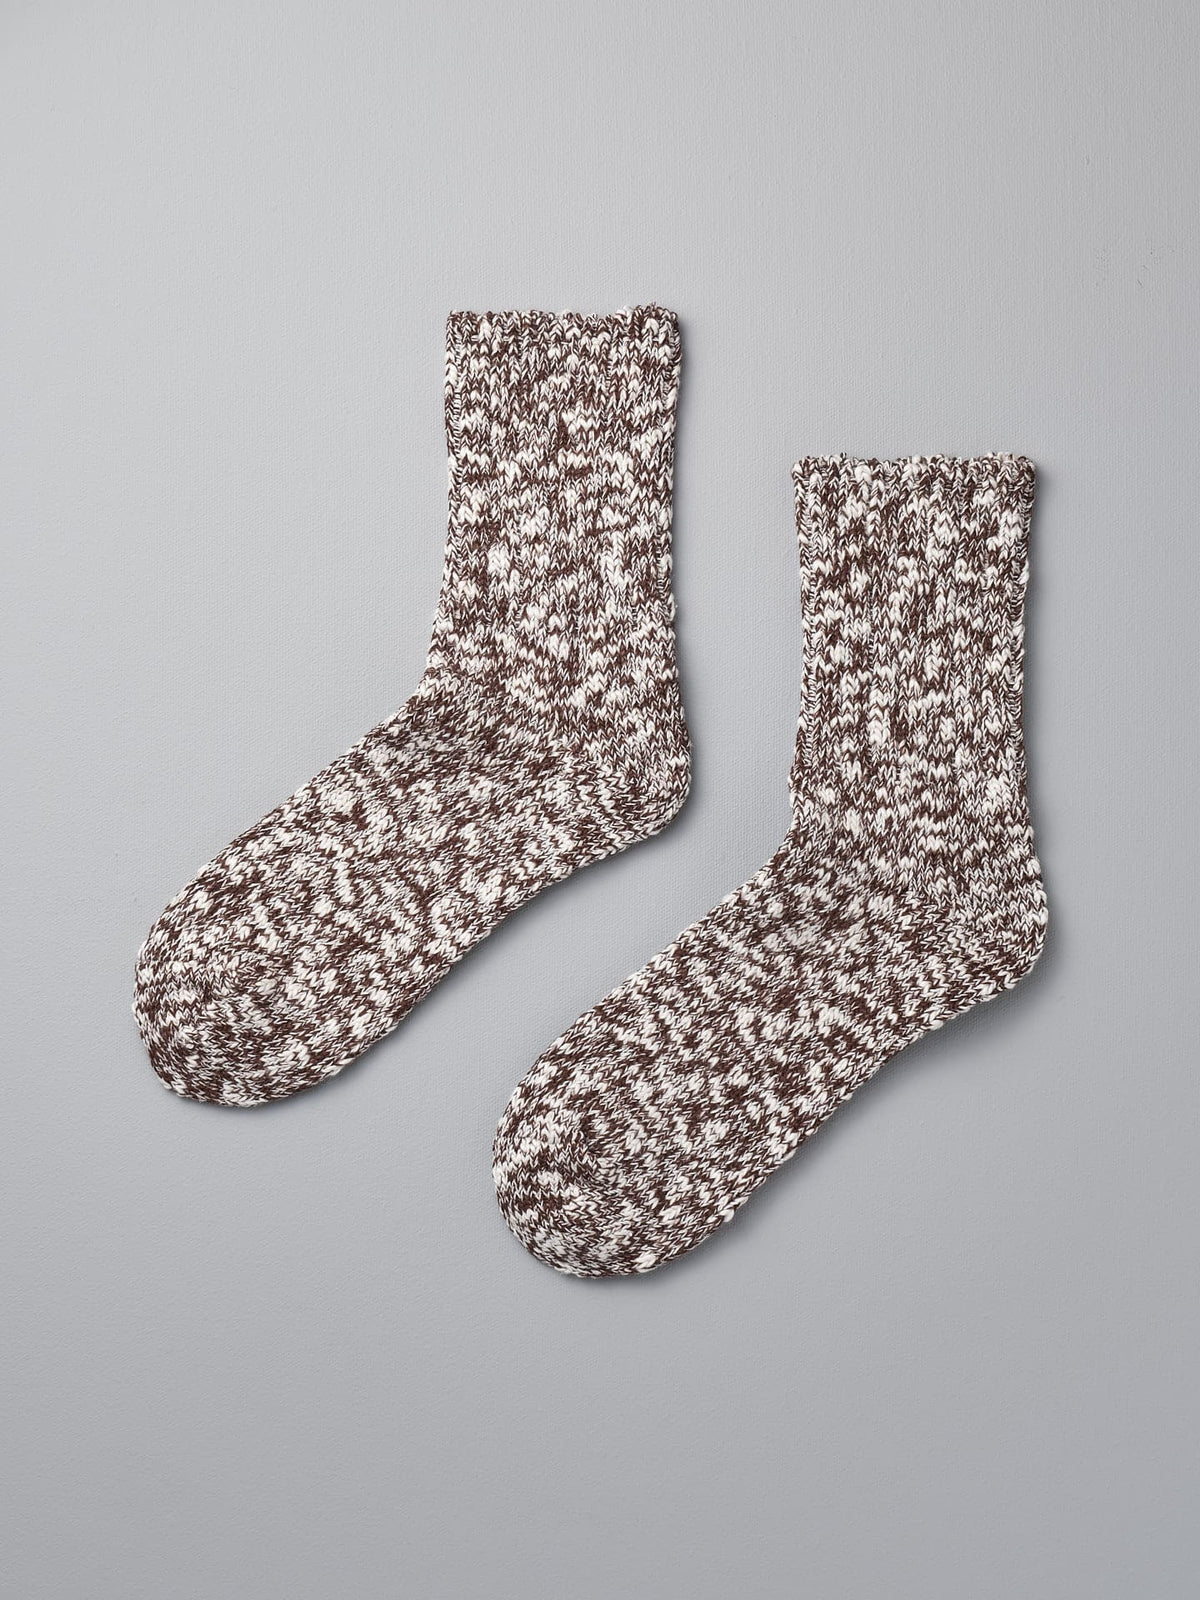 A pair of Mauna Kea Japanese Slub Socks – Brown on a grey background.